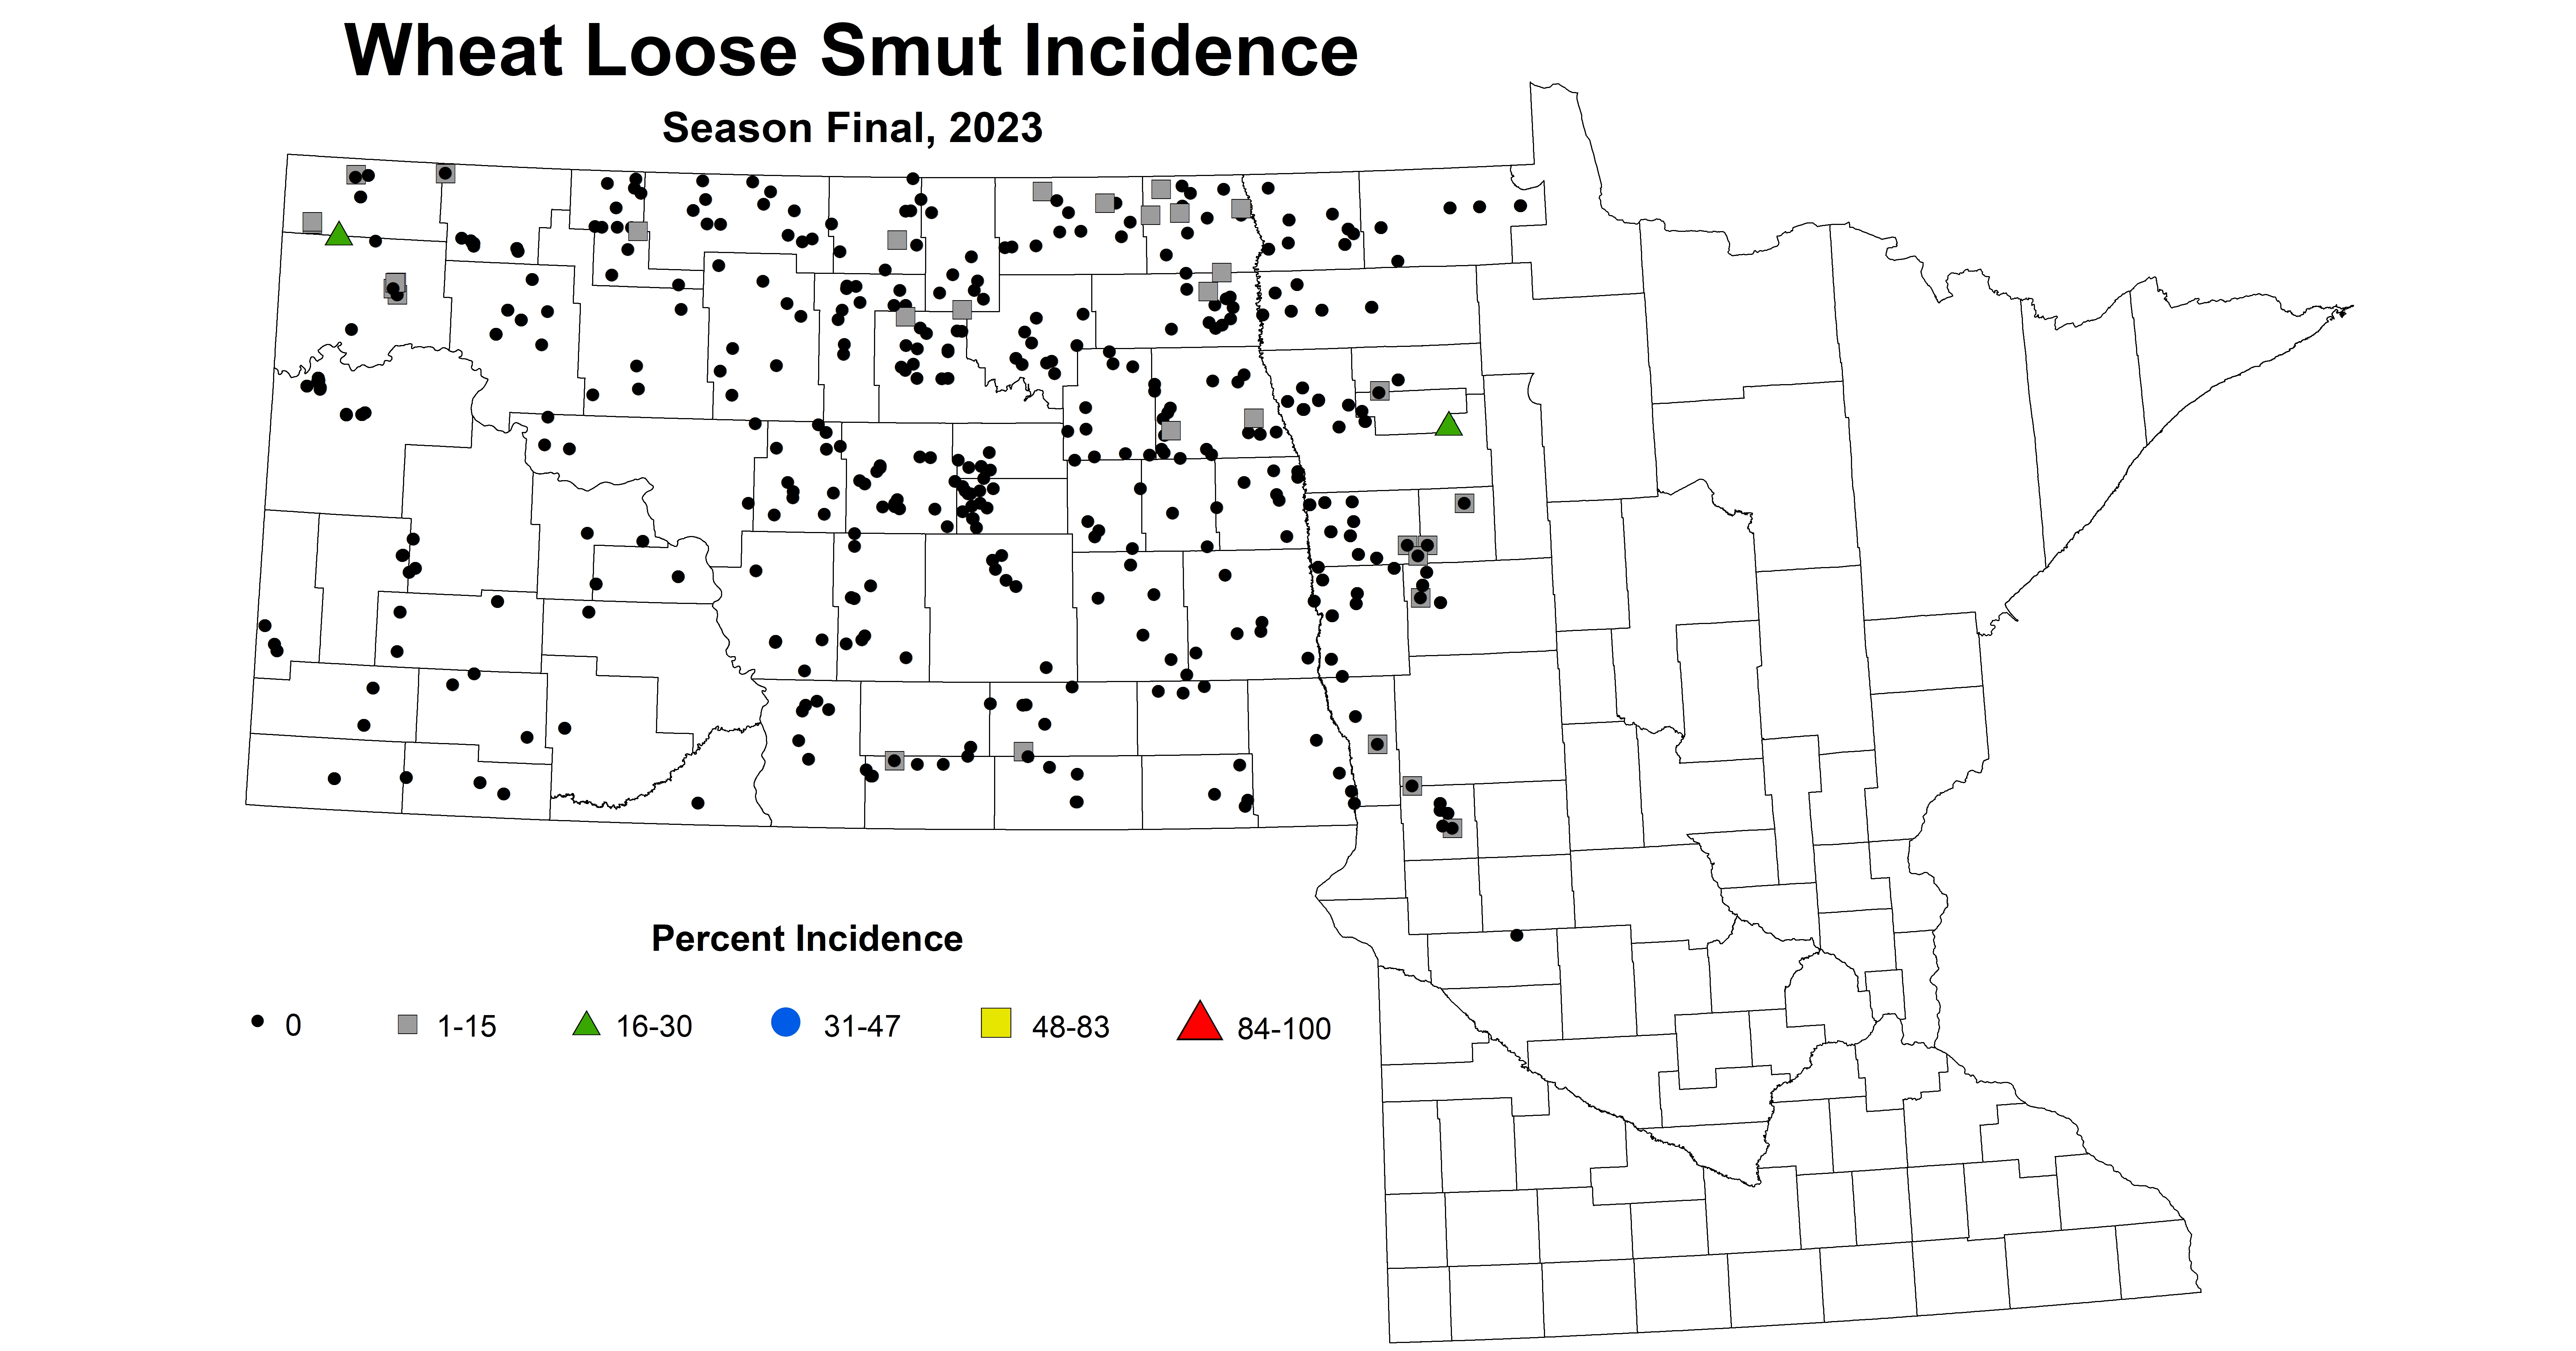 wheat loose smut incidence season final 2023